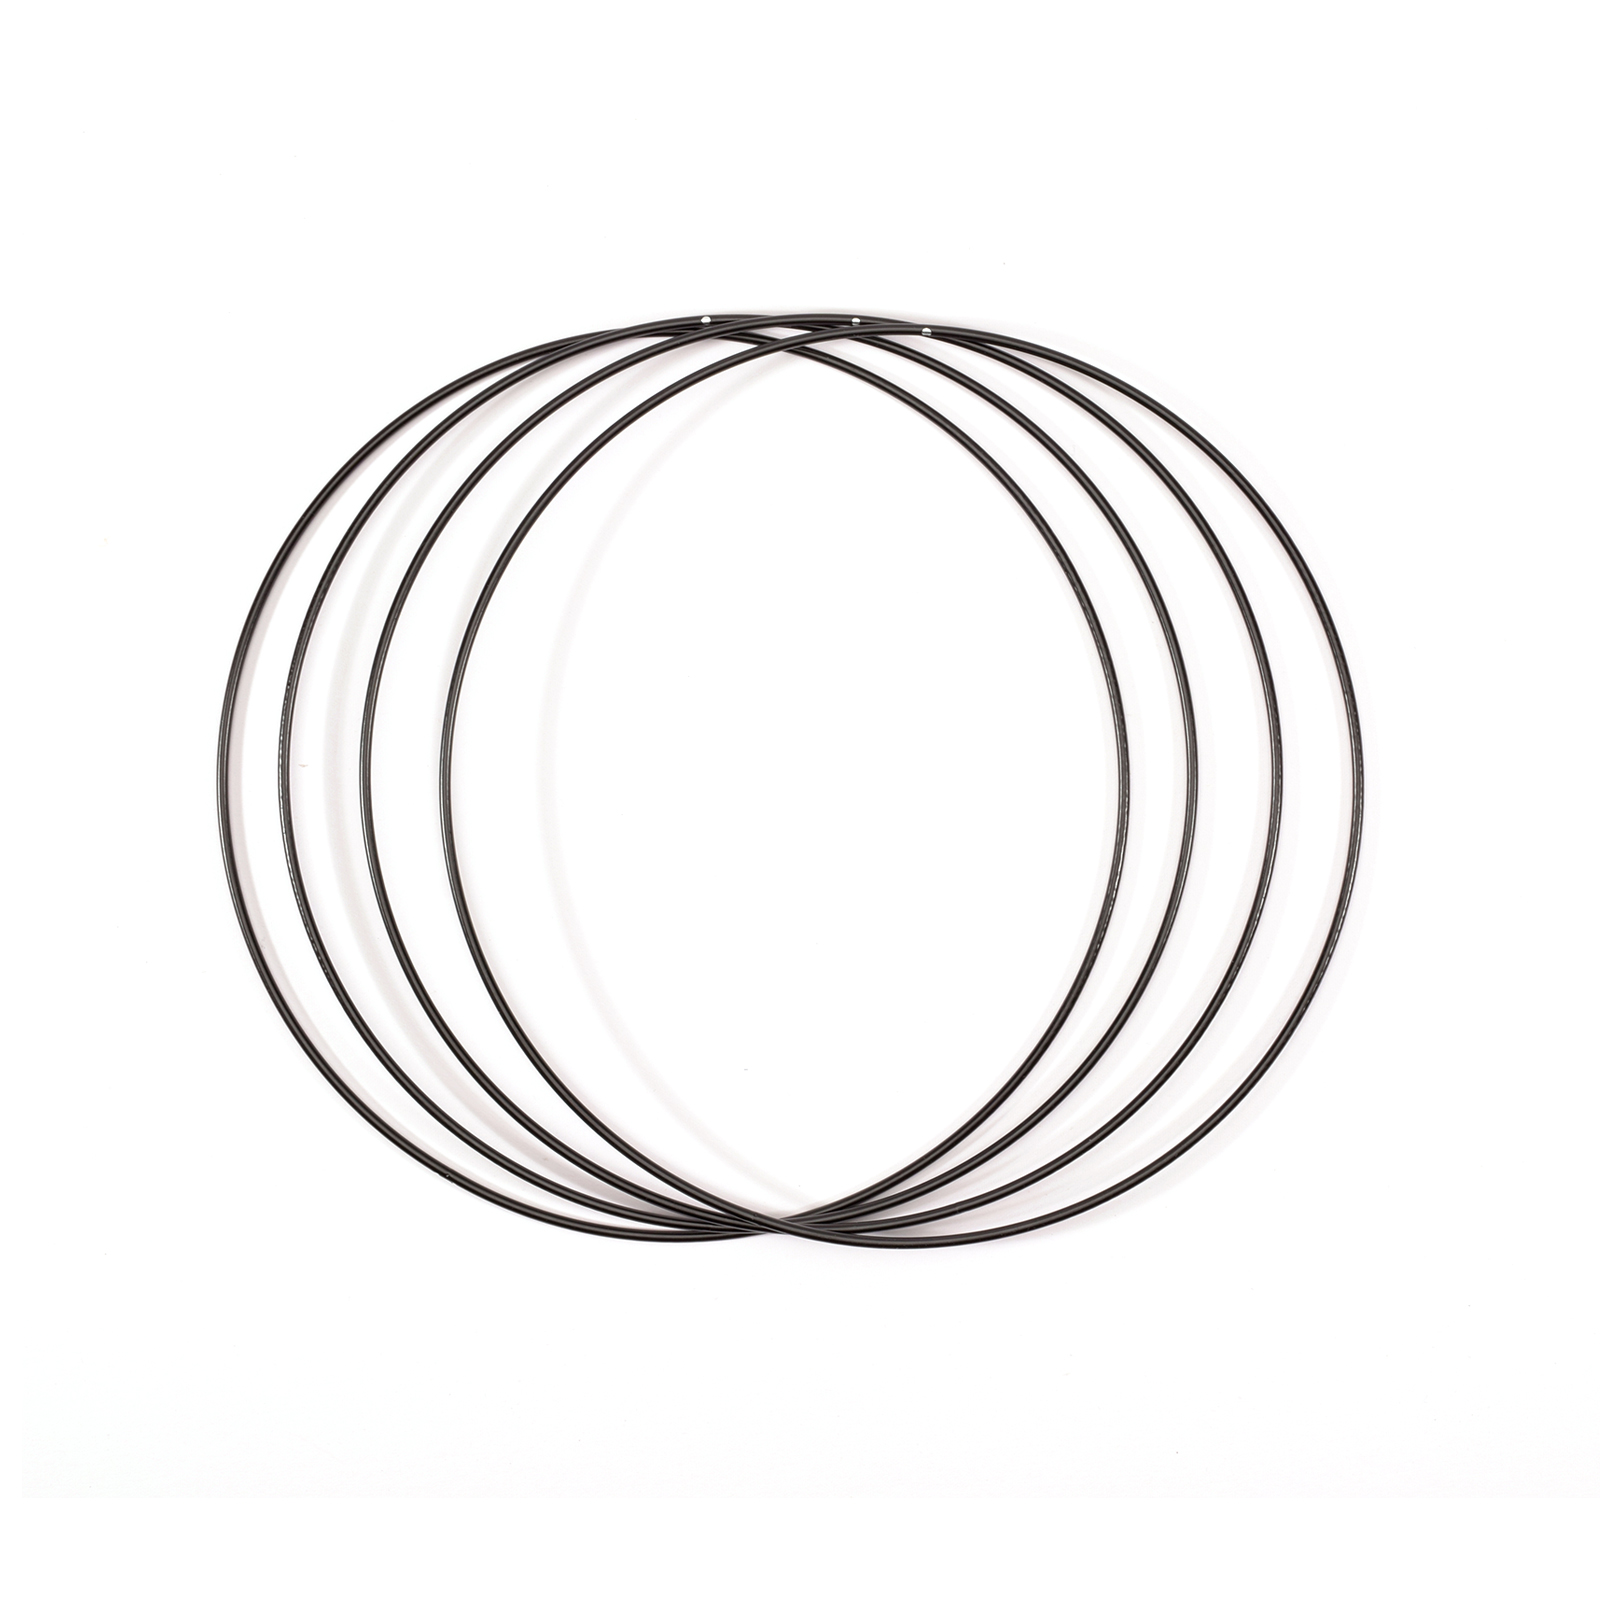 Vaessen Creative • Metal ring Ø25cm 3mm Black 4pieces